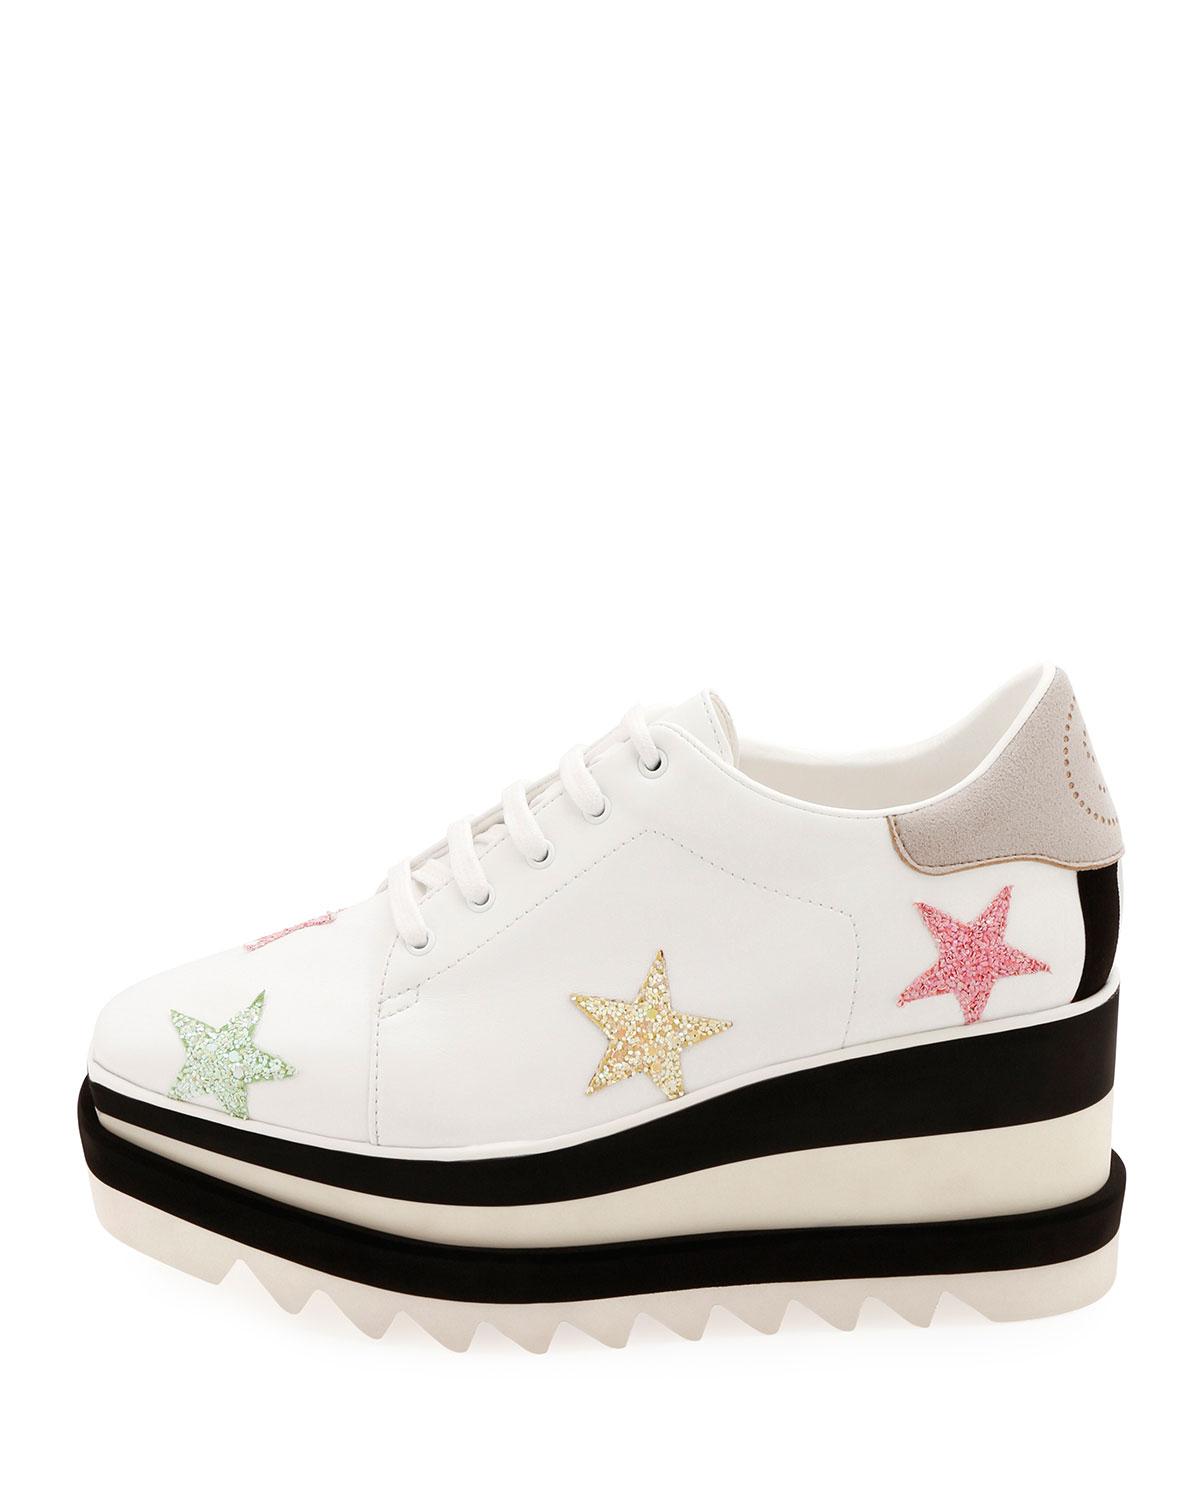 Stella McCartney Elyse Stars Glitter Platform Sneakers in White - Lyst